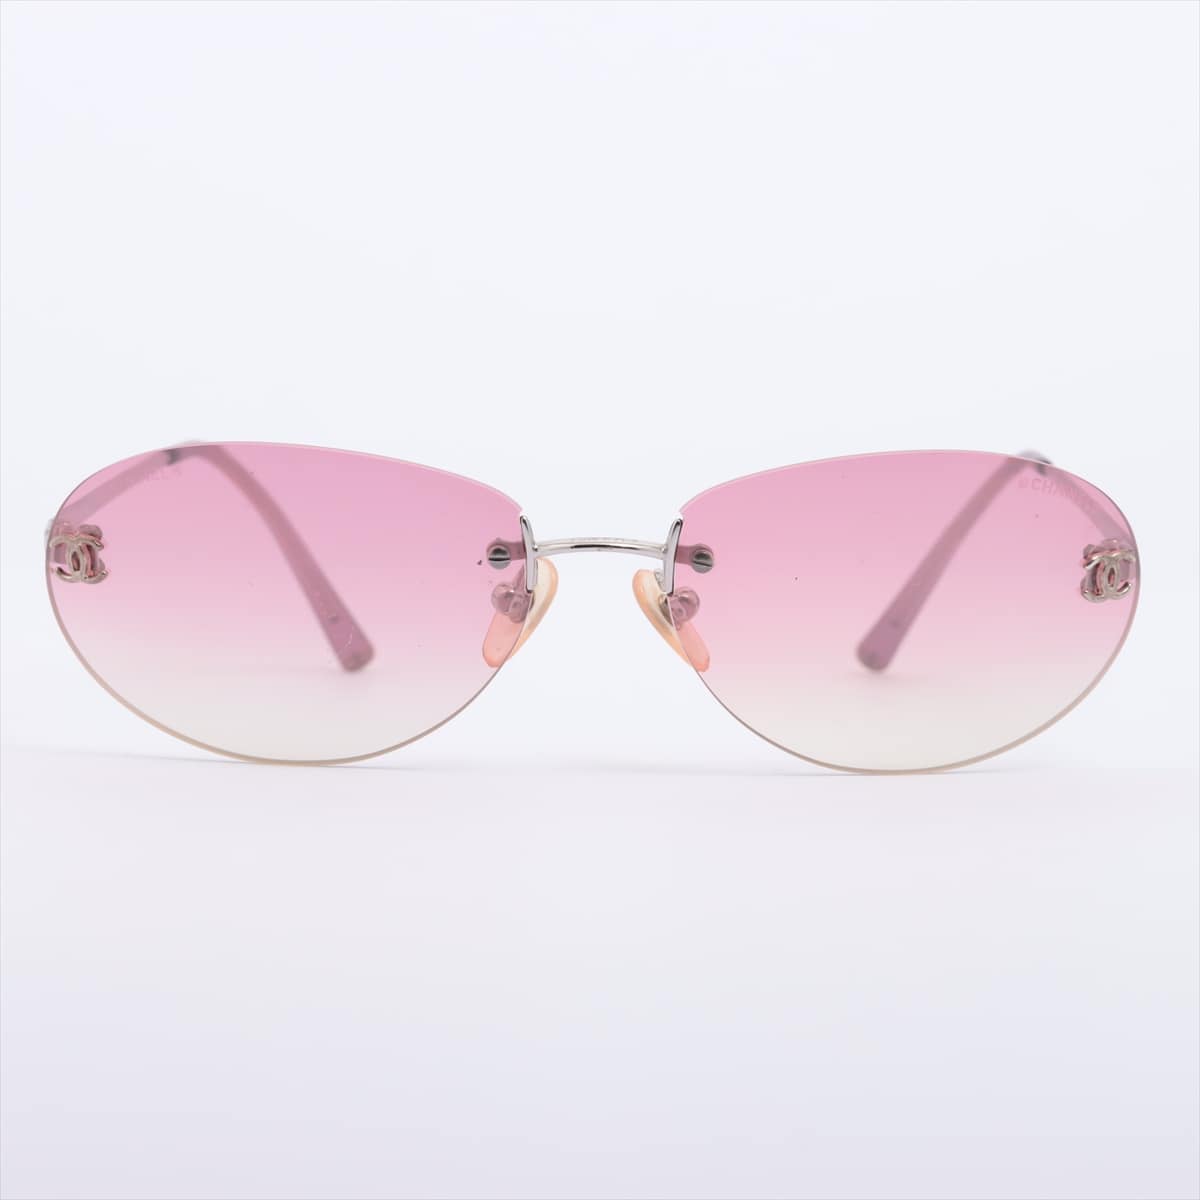 Chanel 4013 Coco Mark Glasses Plastic Pink